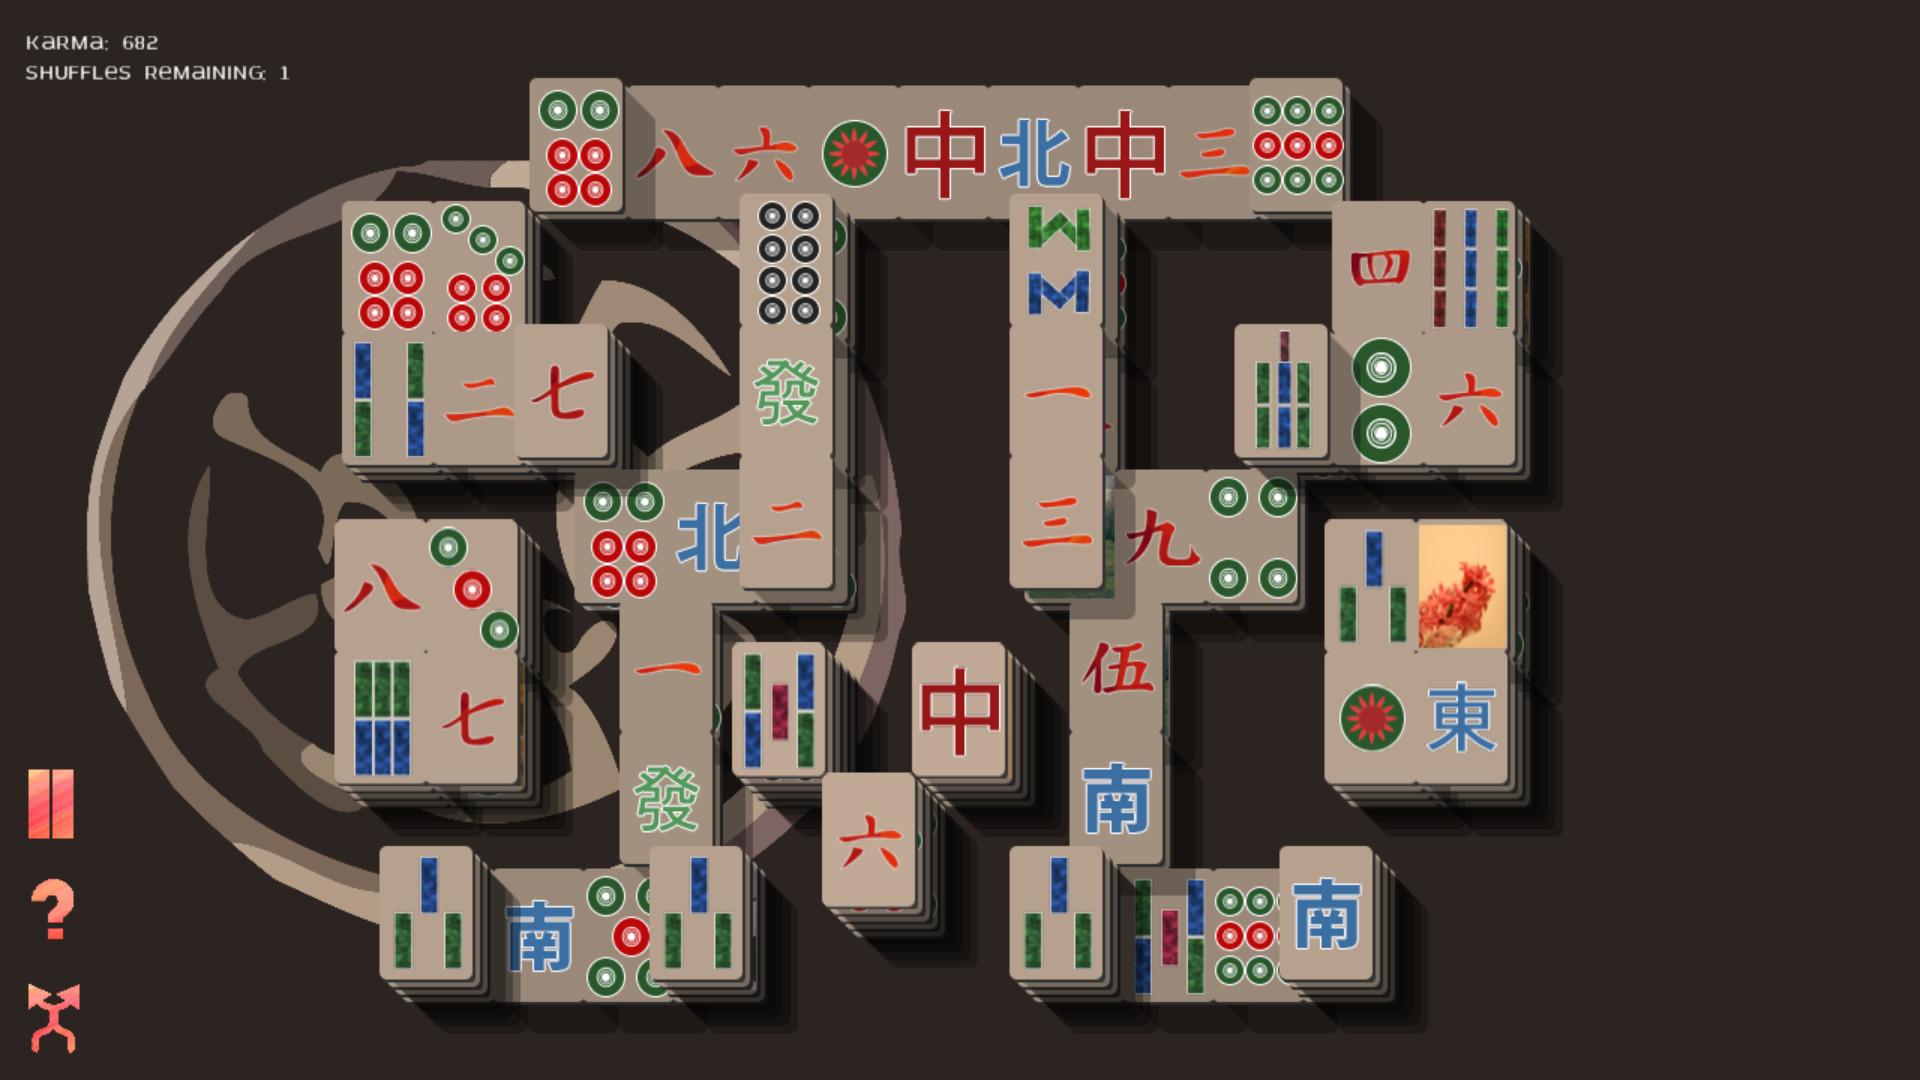 Screenshot №8 from game That's Mahjong!